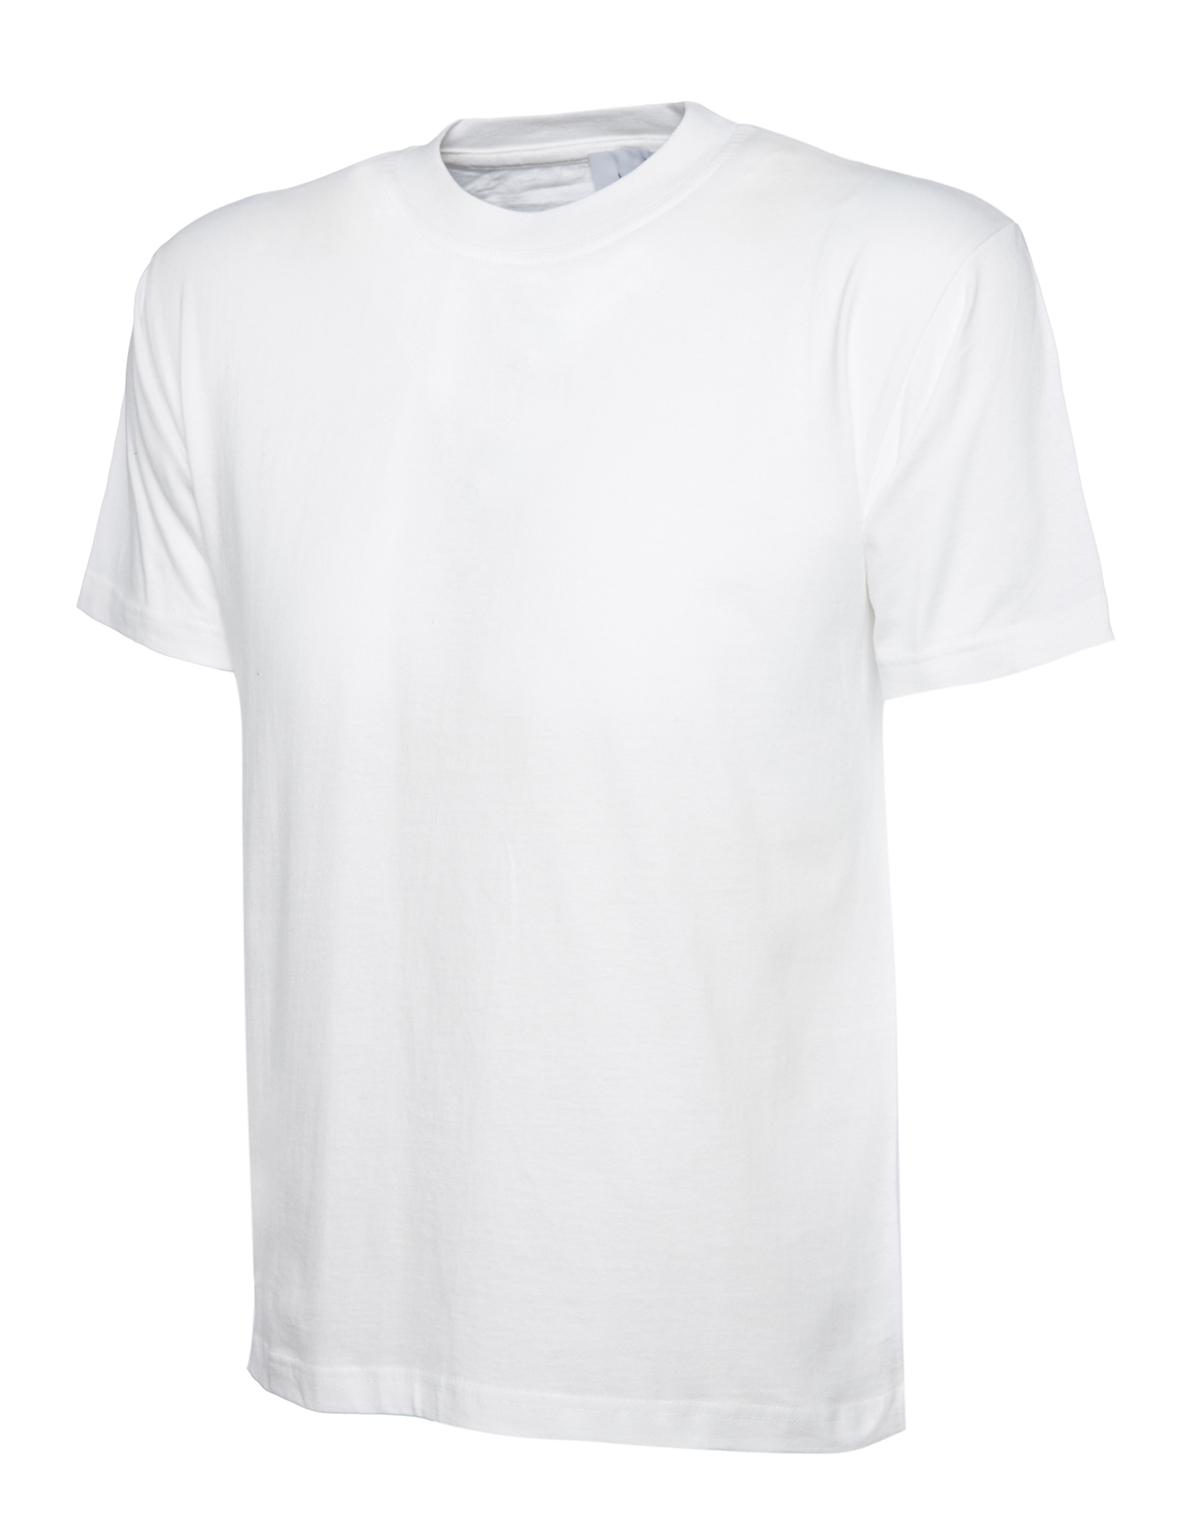 Uneek Herren T-Shirt Classic, Weiß